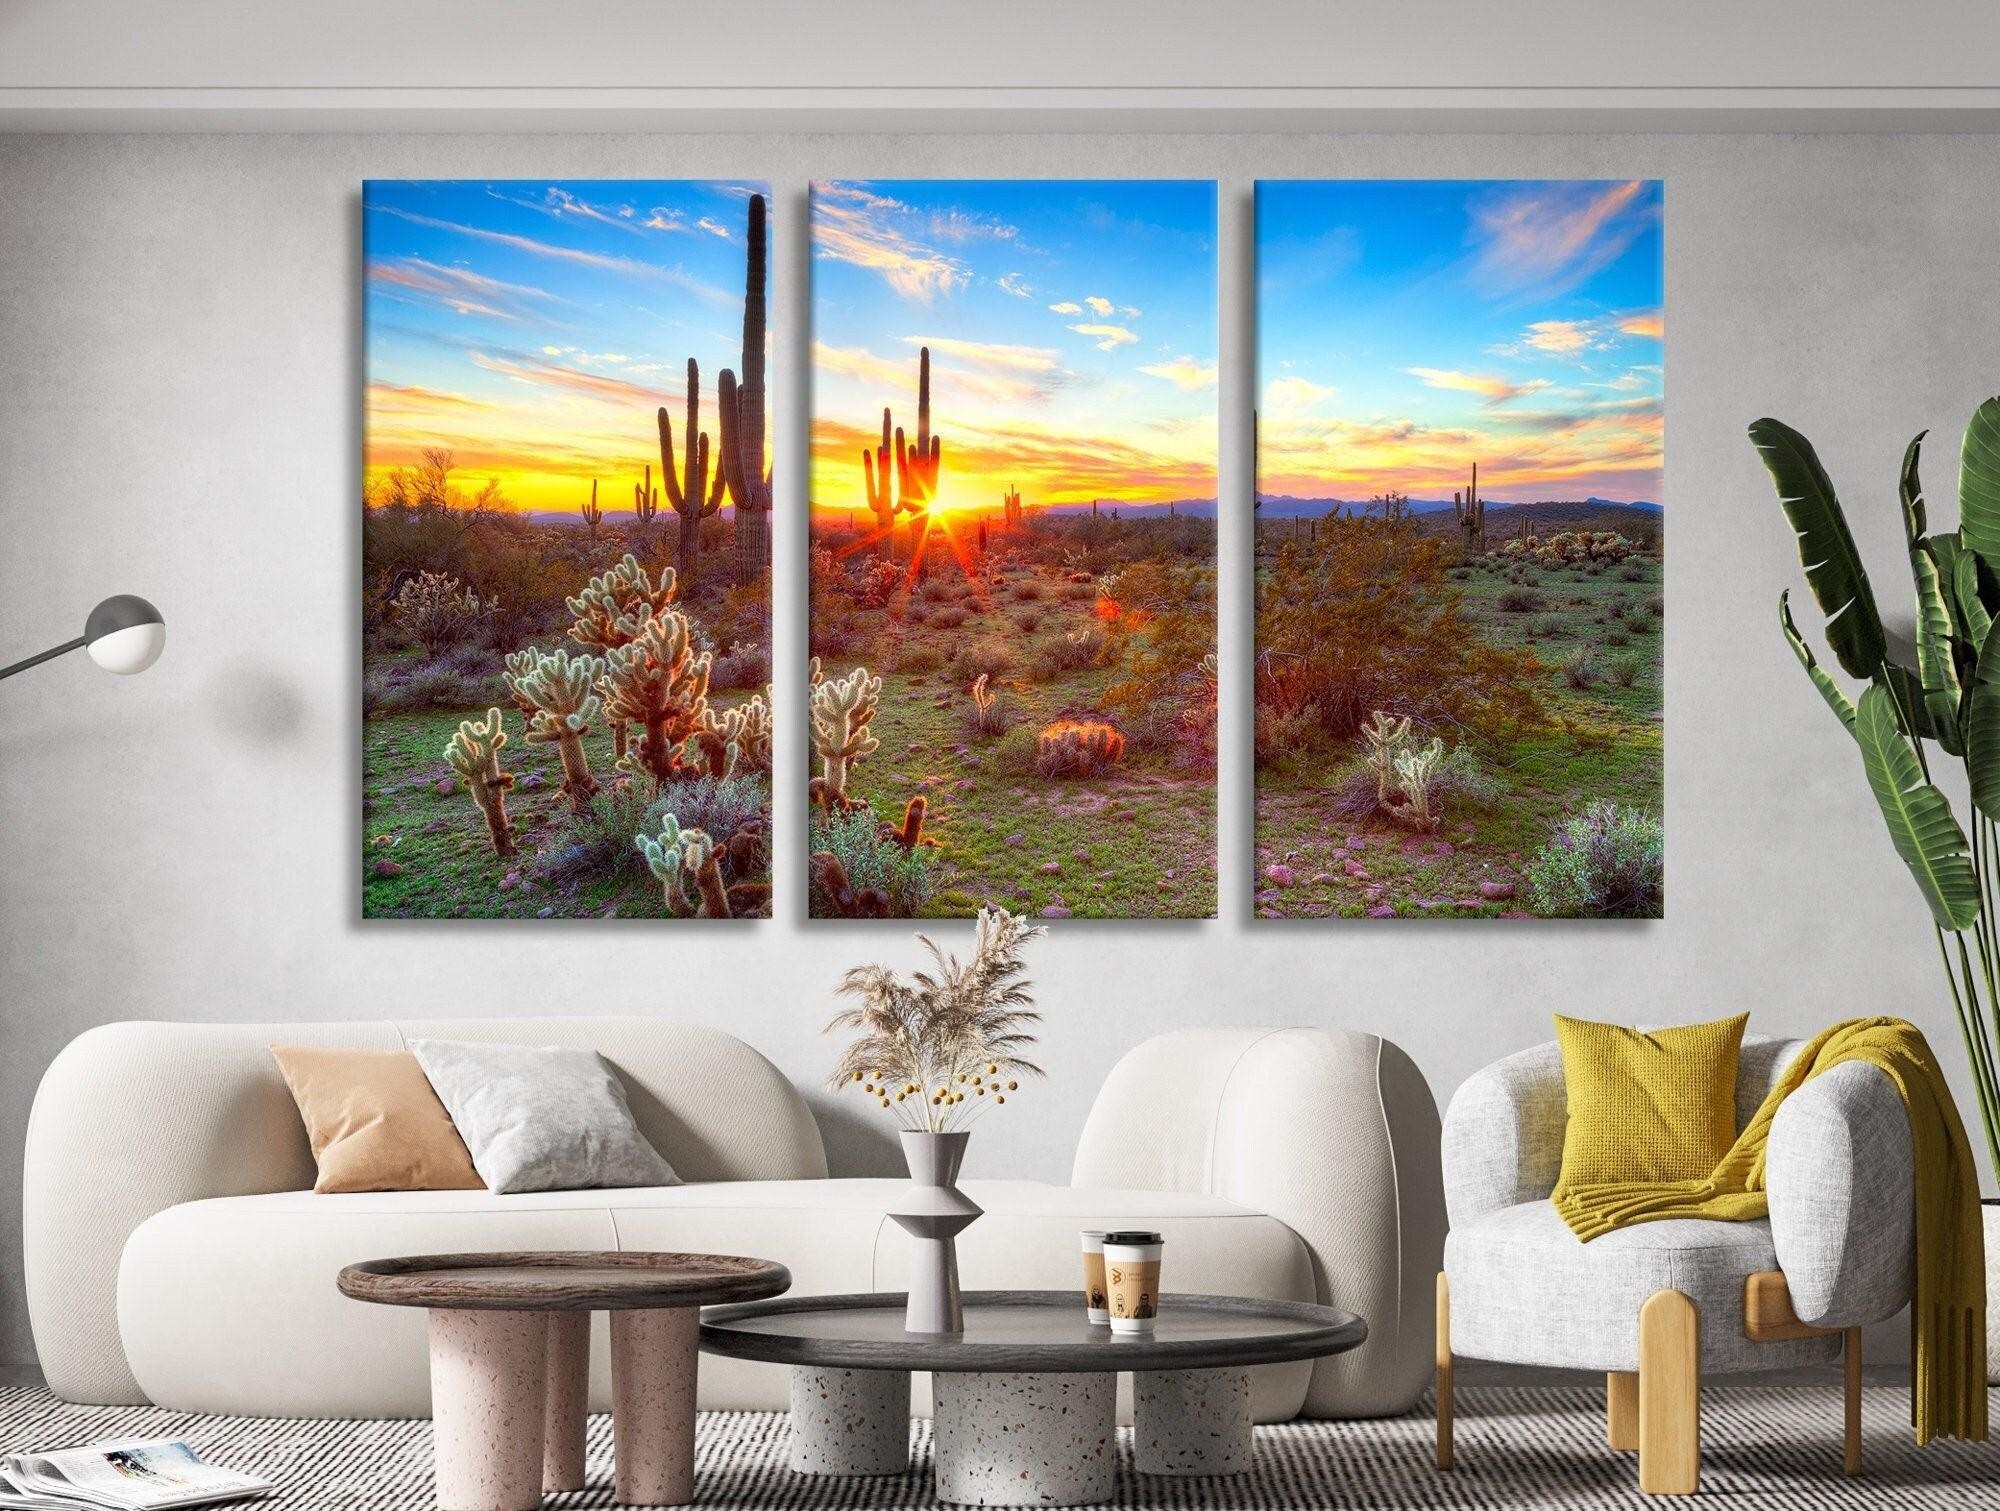 Sonoran Desert Canvas| Giclee home art decor, wall decor, Arizona Sunset Canvas Print Wall Art, Set of 3 Desert Print, Canvas Multiple Size